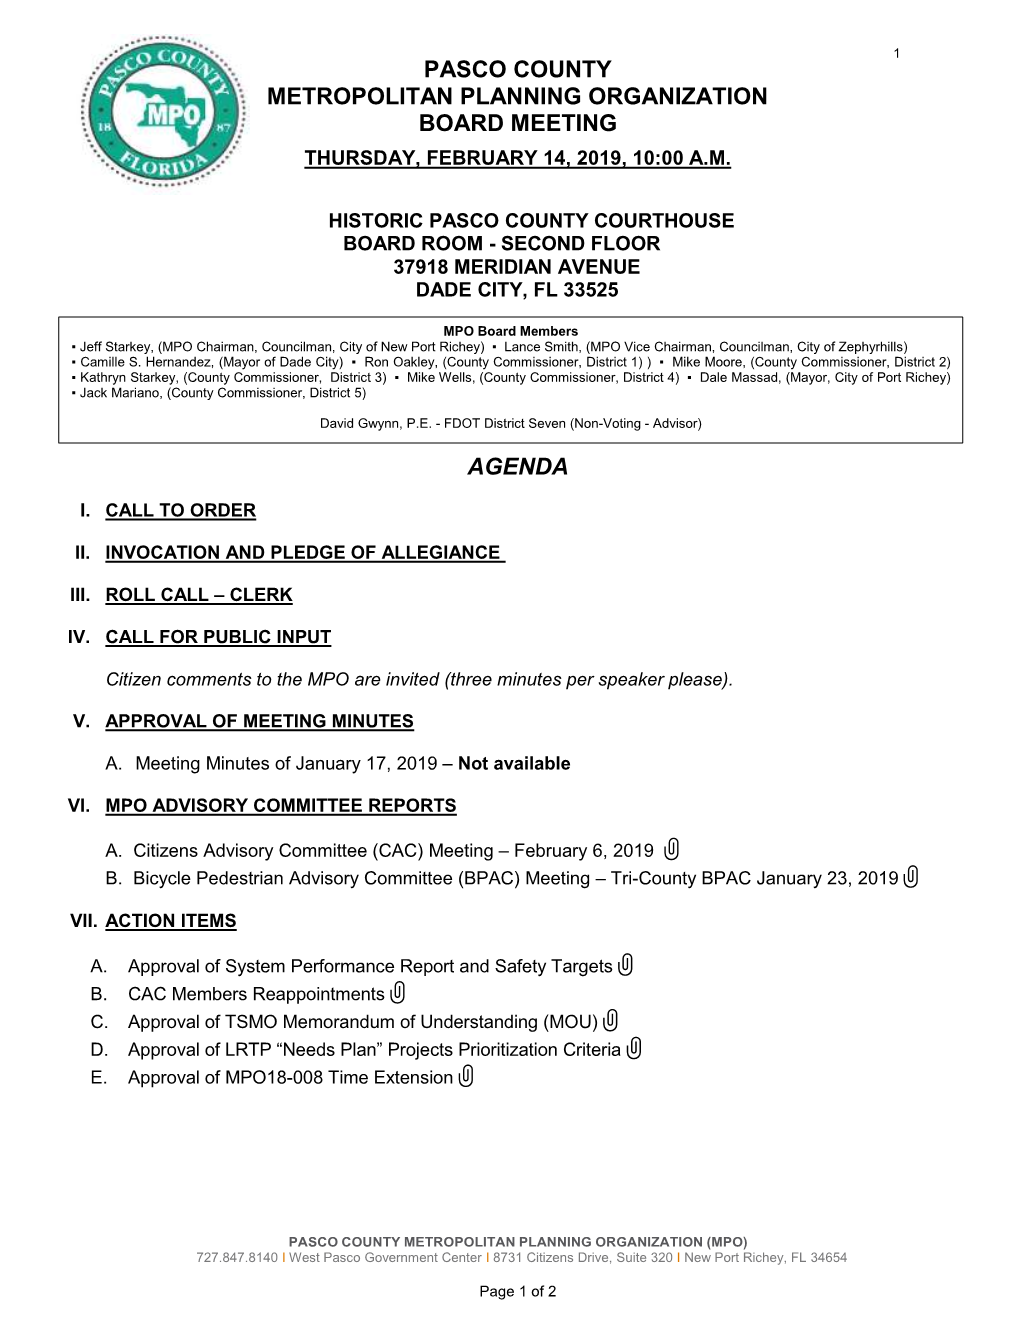 Pasco County Metropolitan Planning Organization Board Meeting Thursday, February 14, 2019, 10:00 A.M